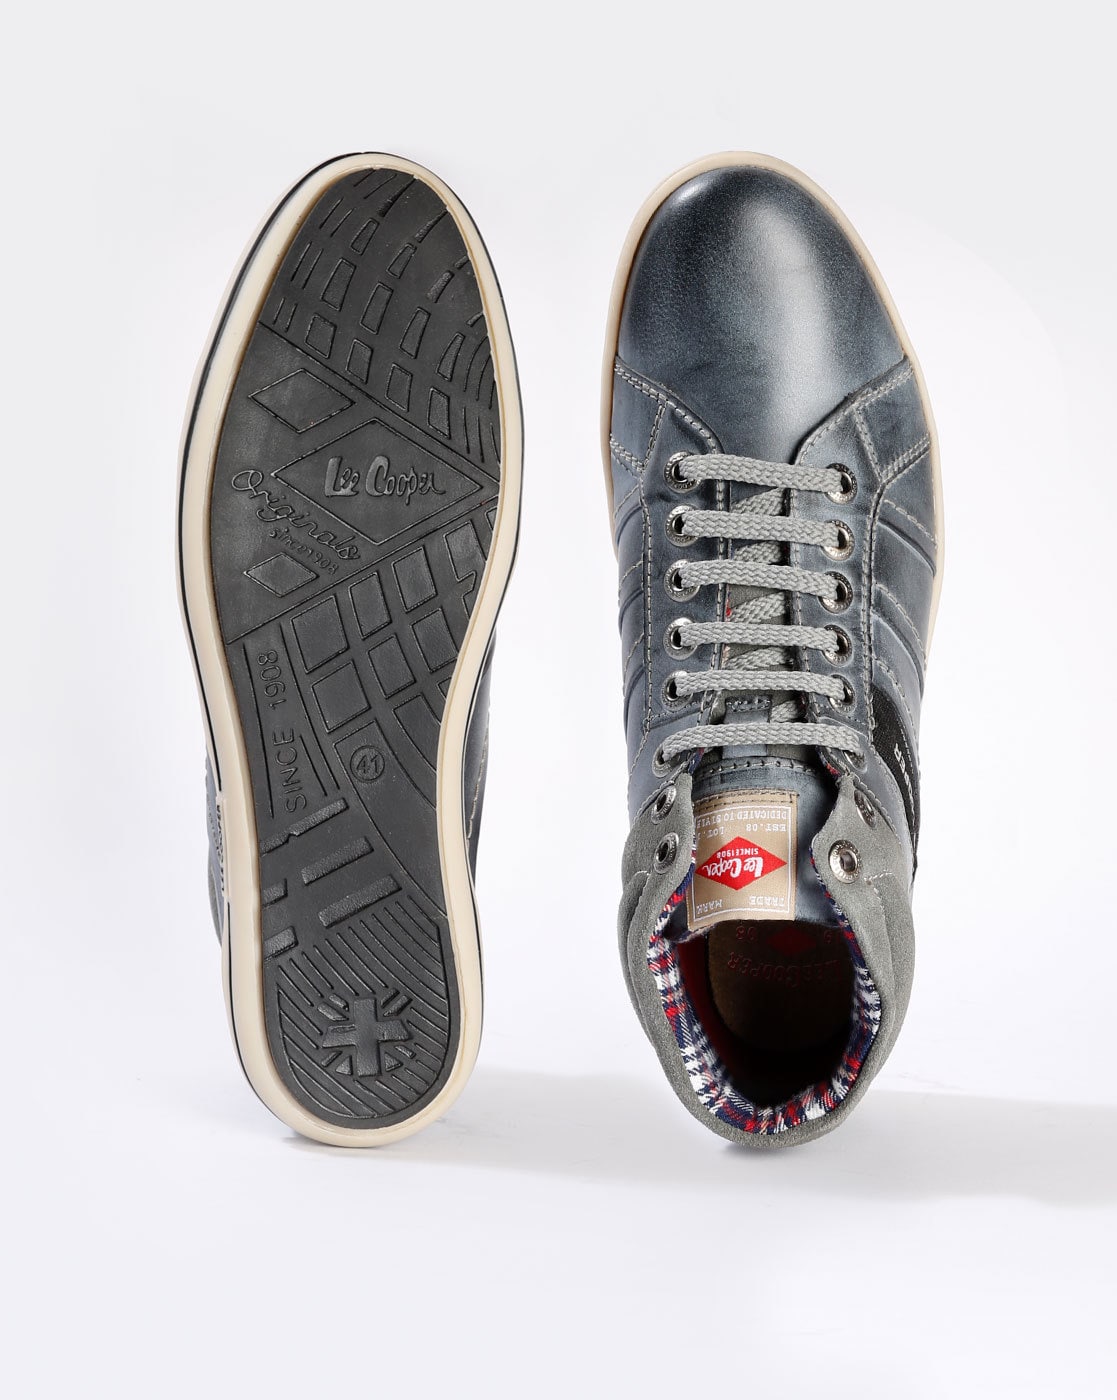 Lee Cooper Men's Dark Grey and Light Grey Sneakers - 8 UK/India (42 EU) :  Amazon.in: Fashion